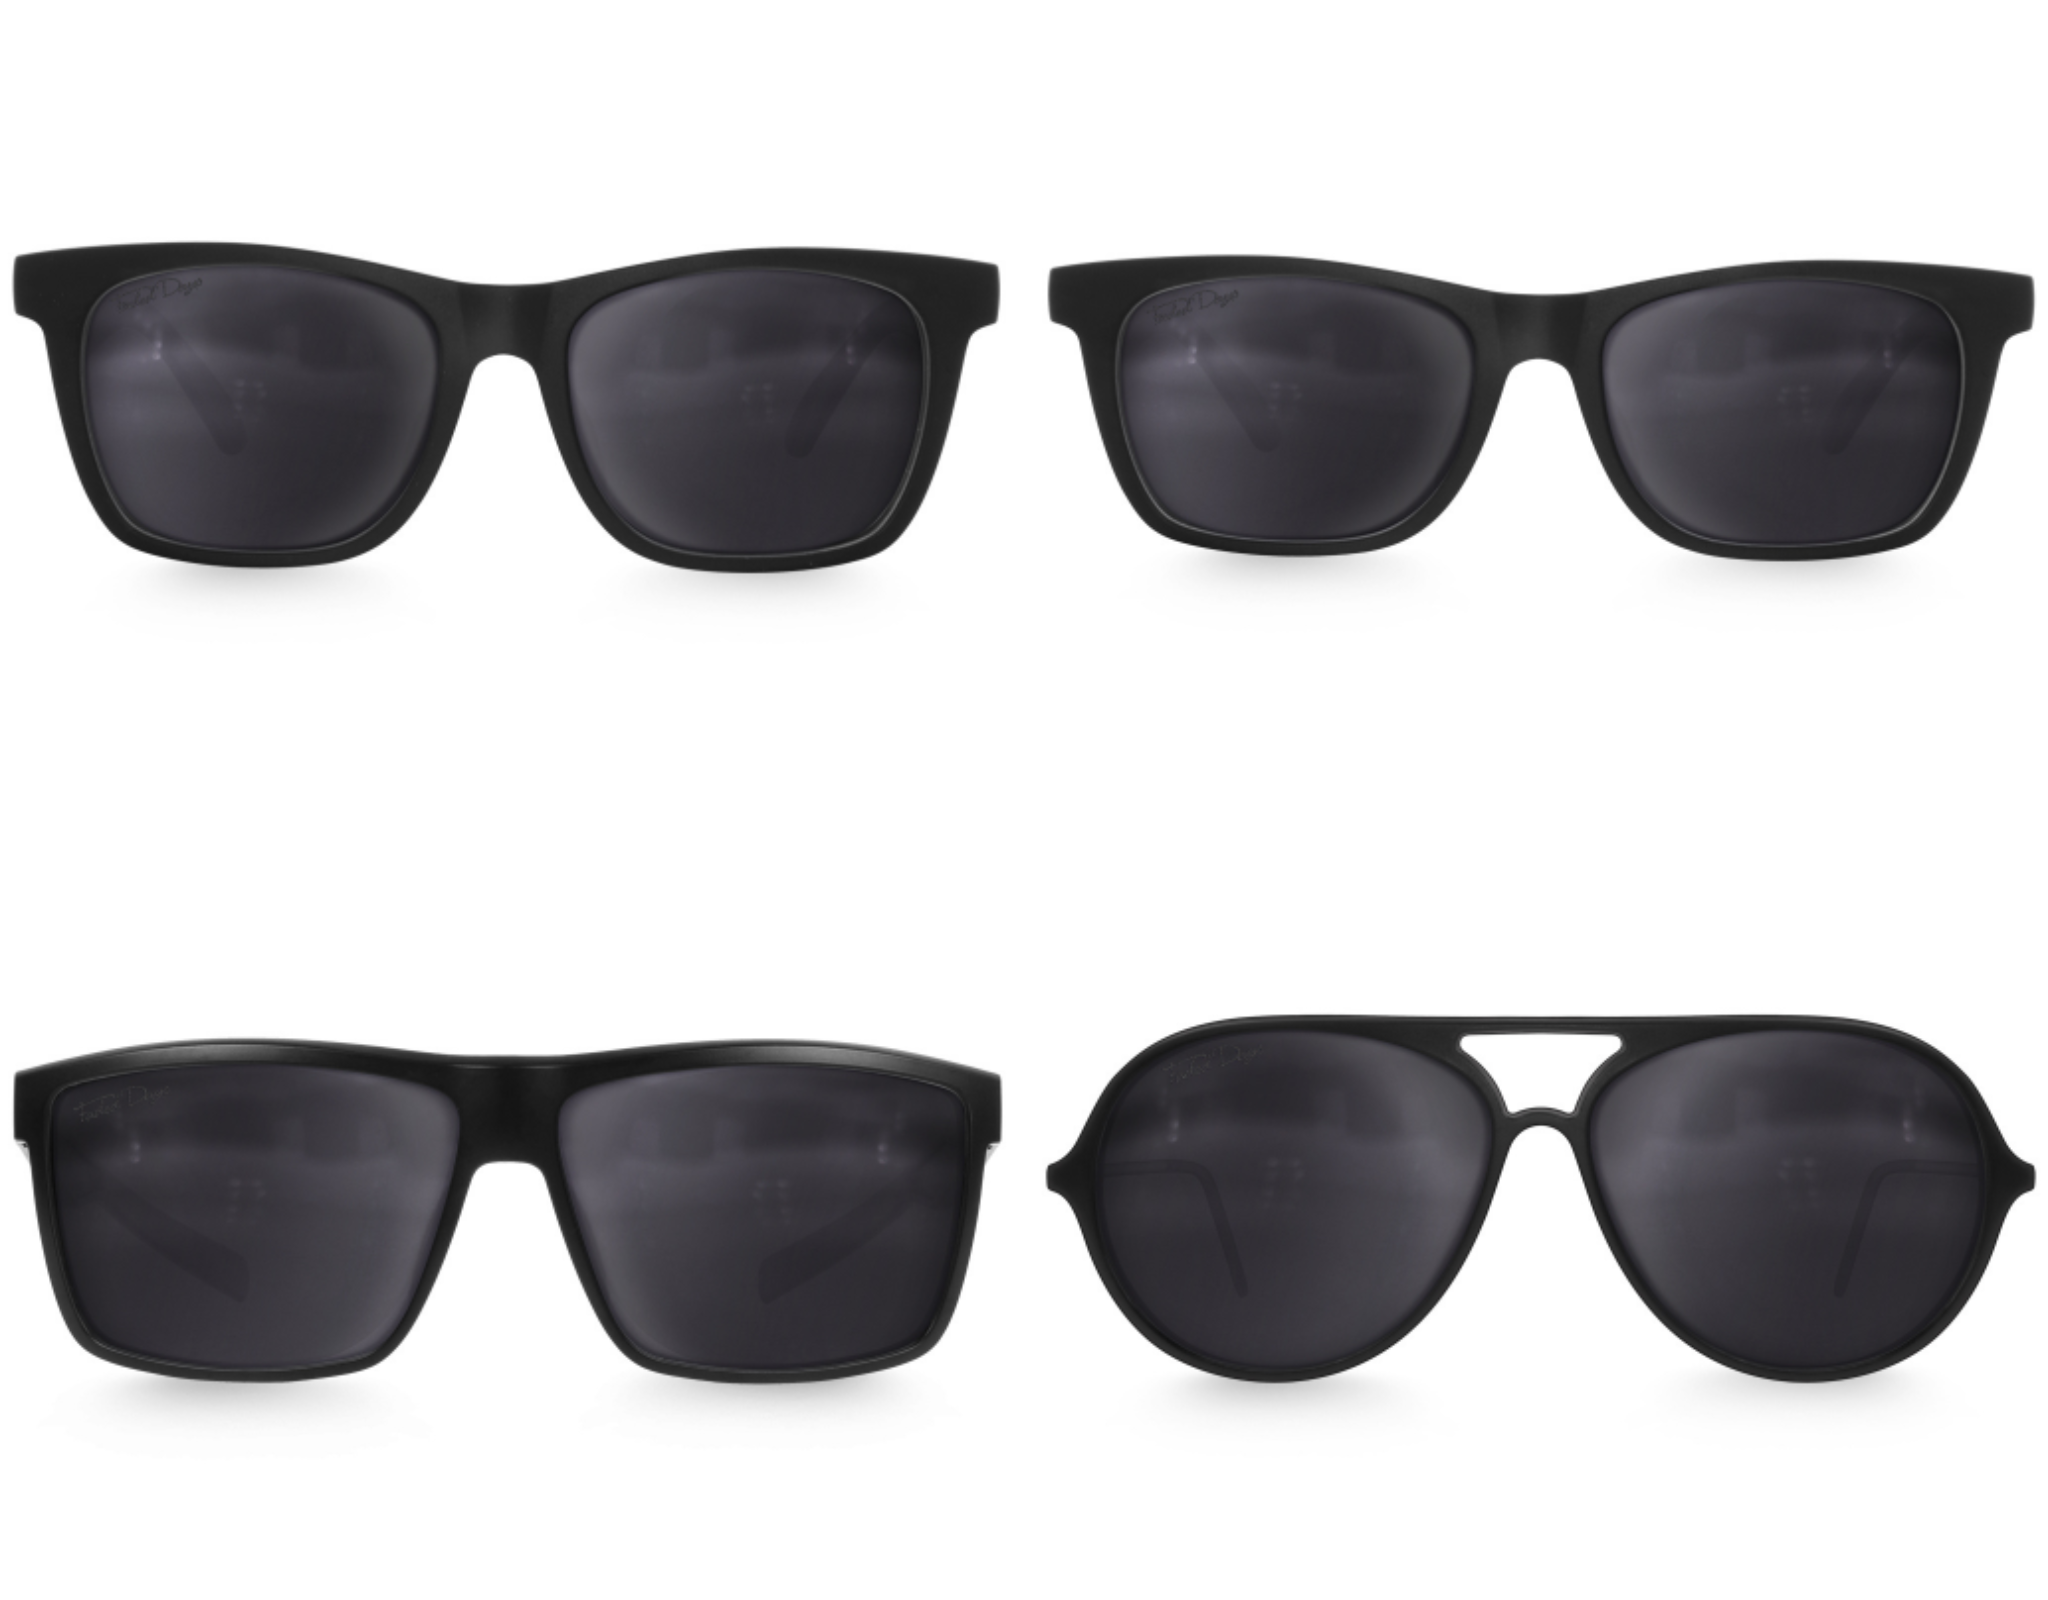 XXL Polarized Sunglasses Variety Bundle